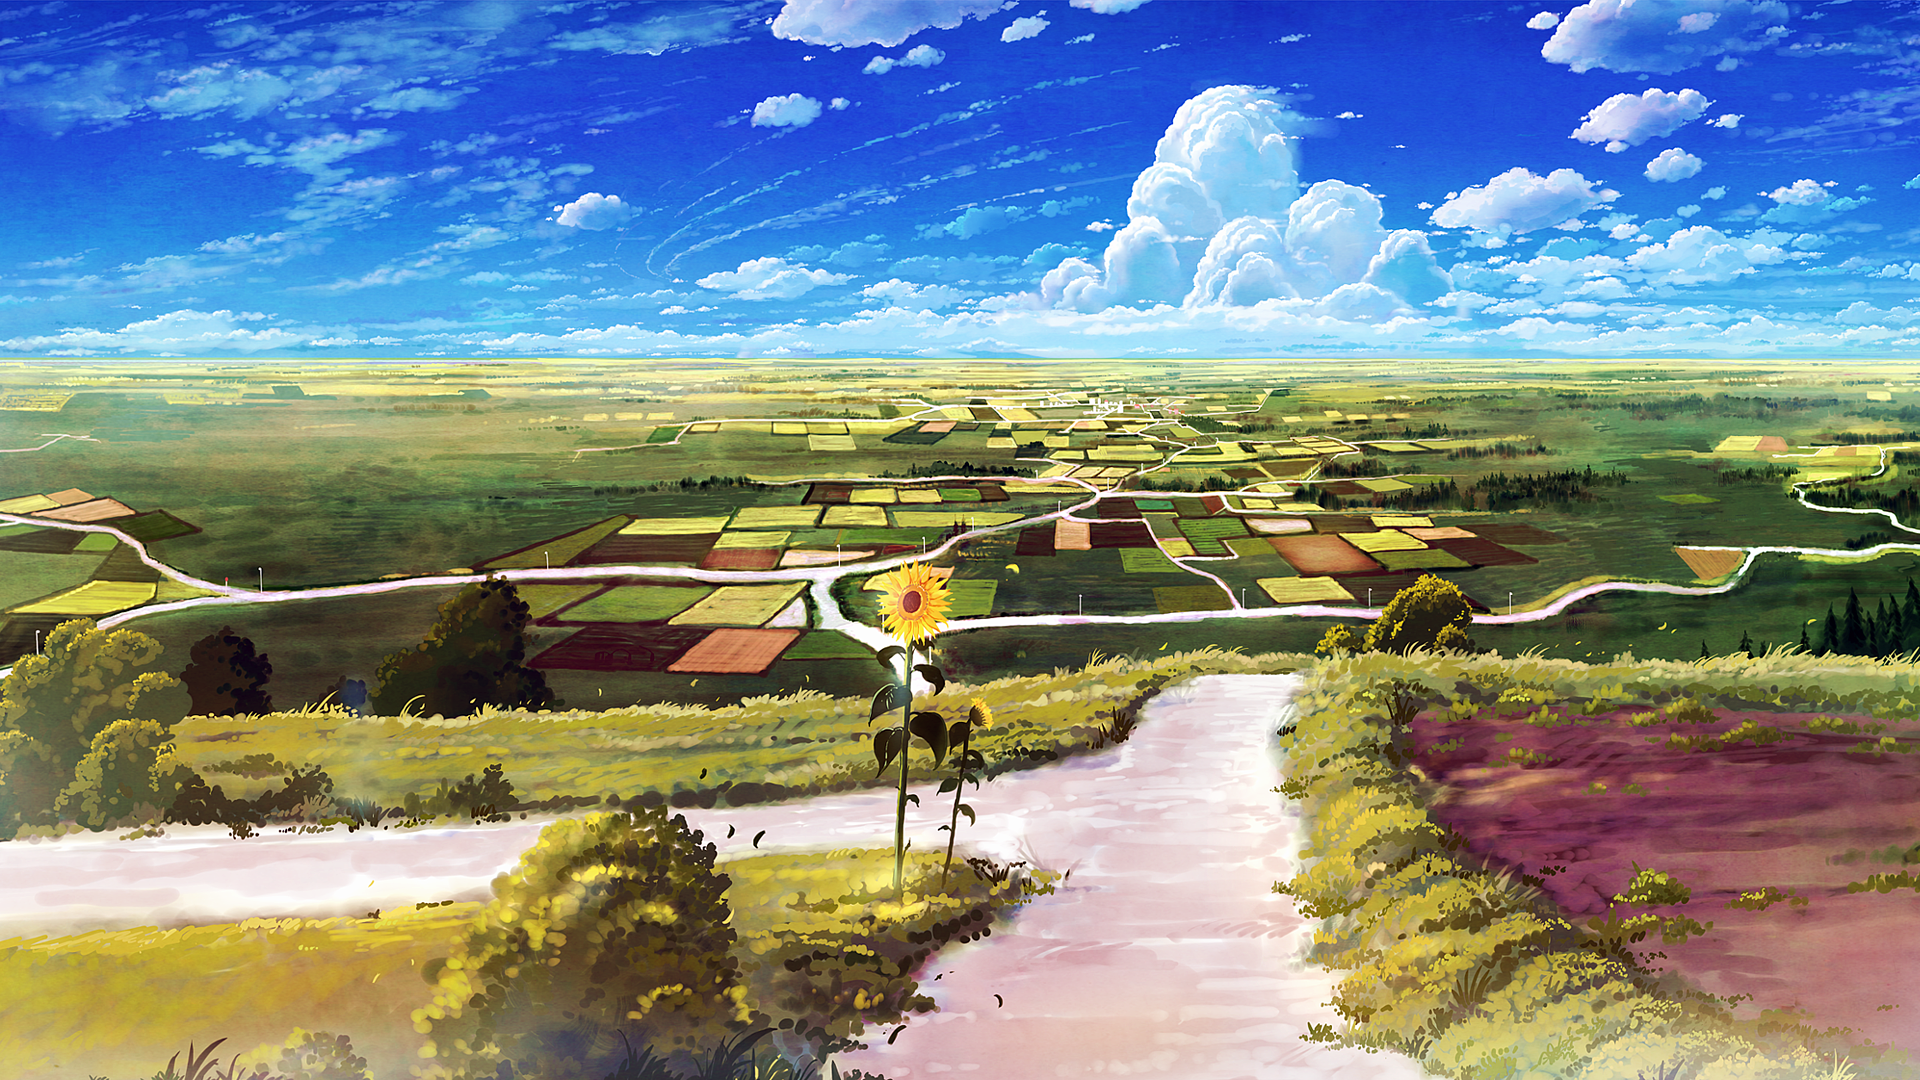 Random Anime Wallpaper. Landscape wallpaper, Scenery wallpaper, Anime scenery